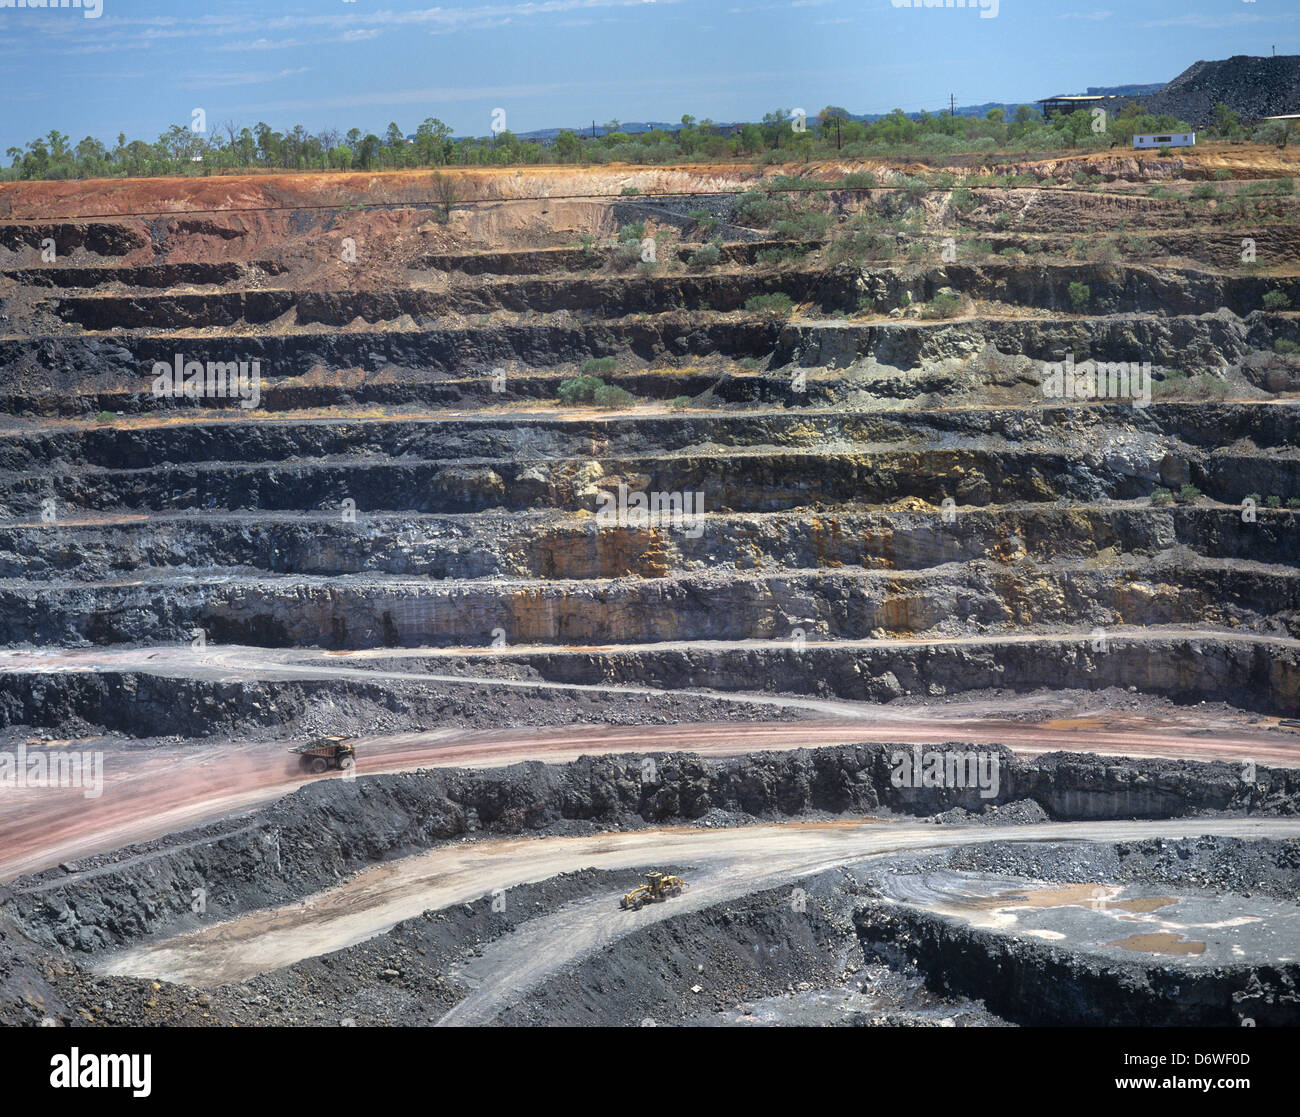 Australia, Northern Territory, Ranger Uranium Mine, view of the open cut mining operation Stock Photo